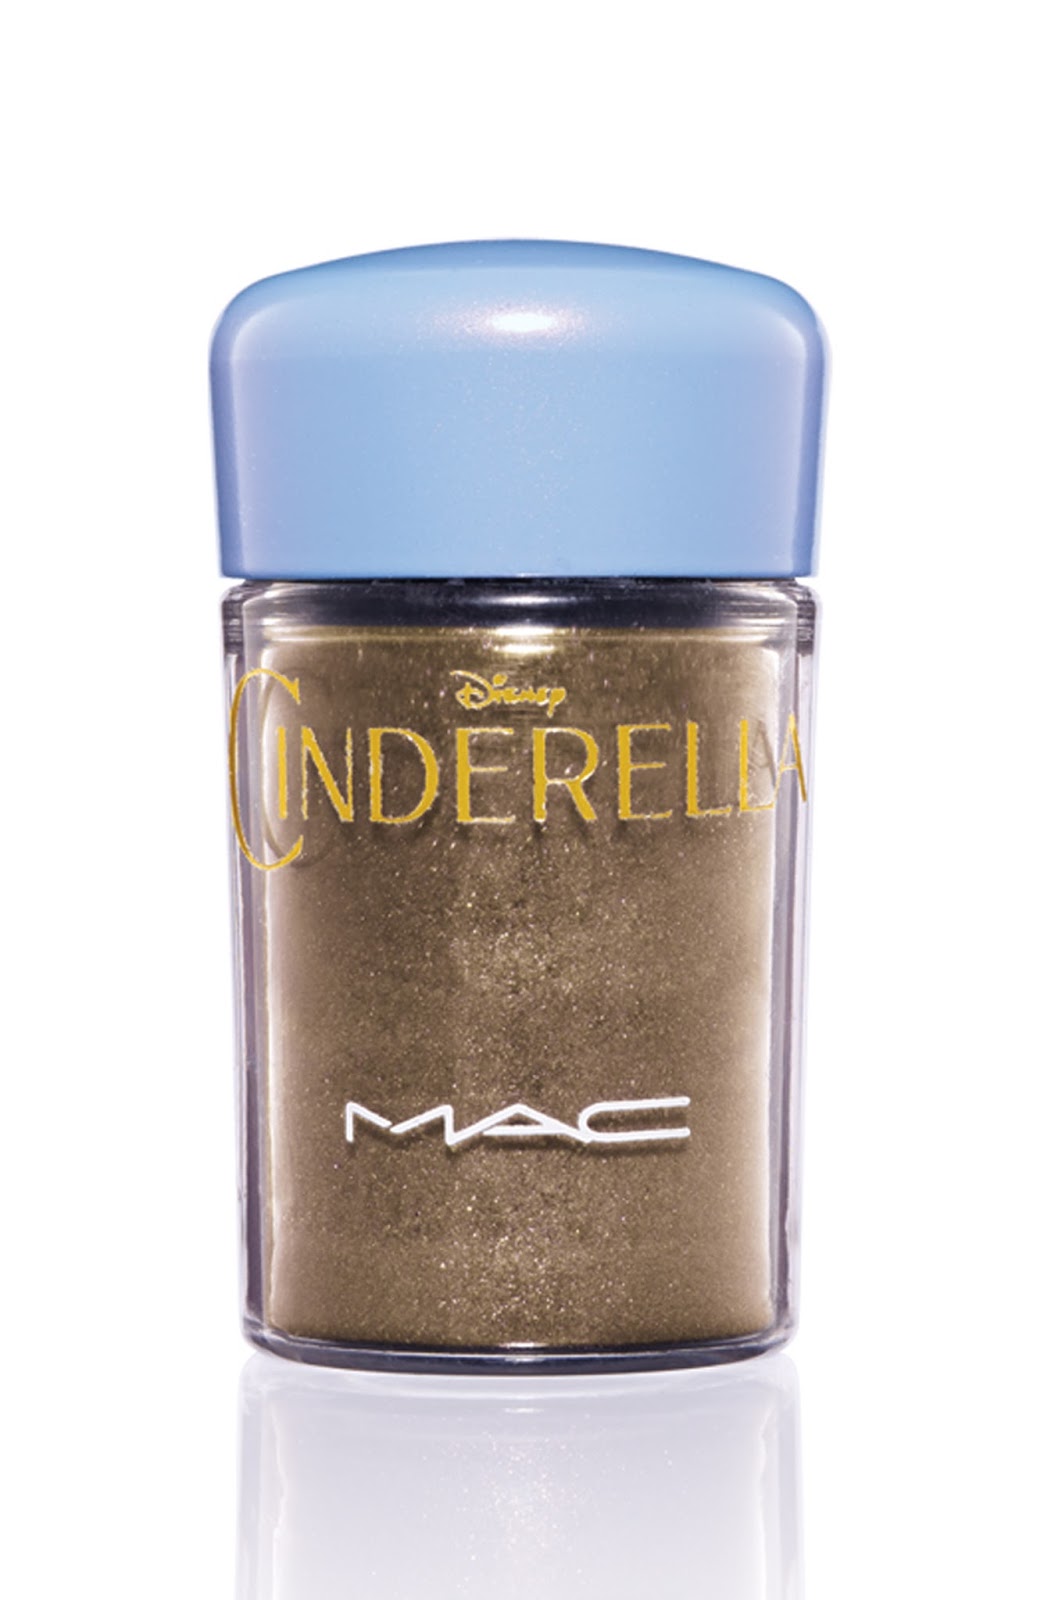 Press Release: MAC Cinderella - March 16th 2015